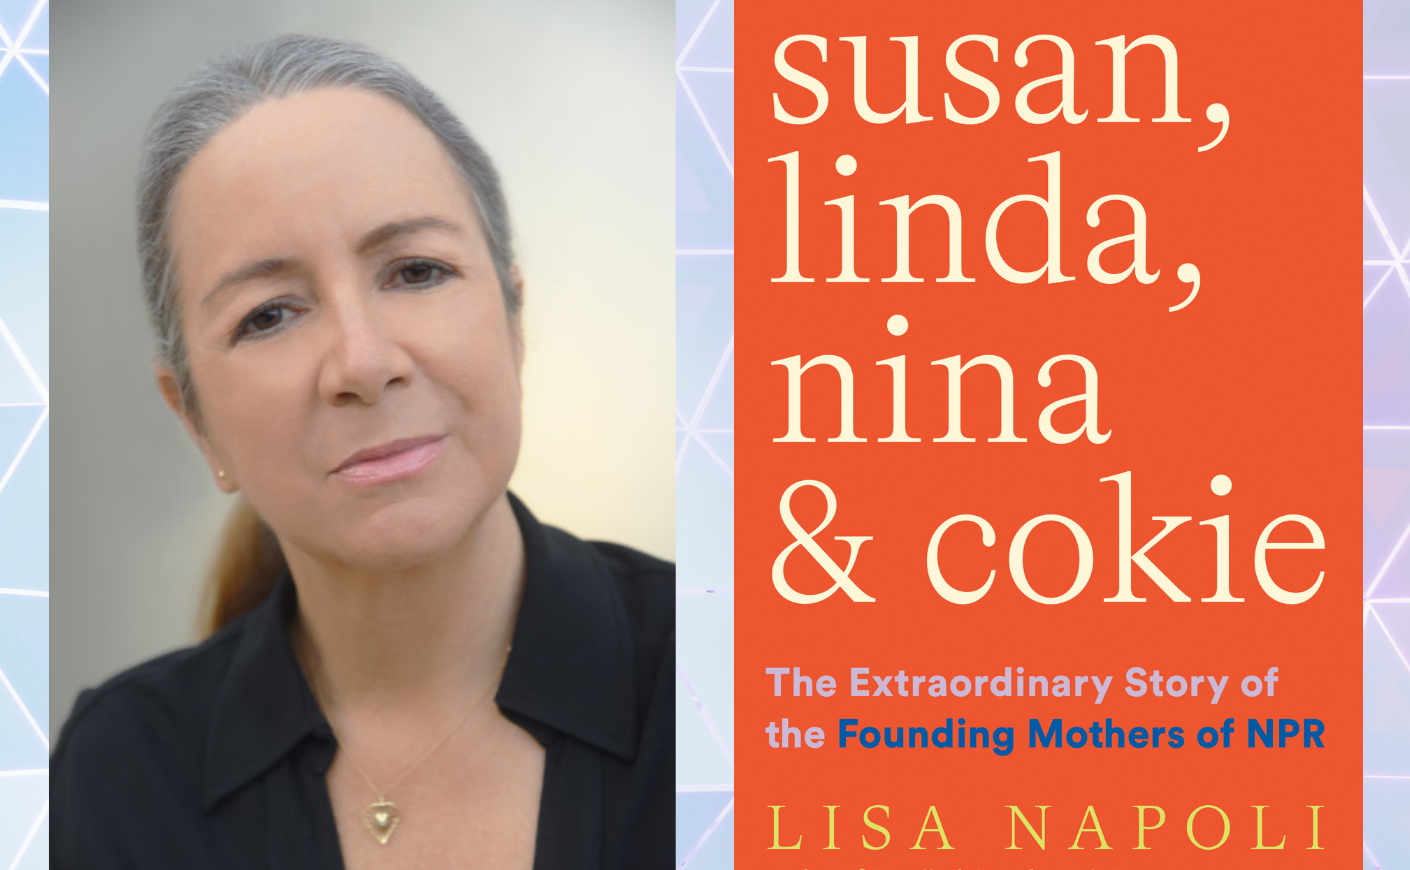 Lisa Napoli; Susan, Linda, Nina & Cokie book cover